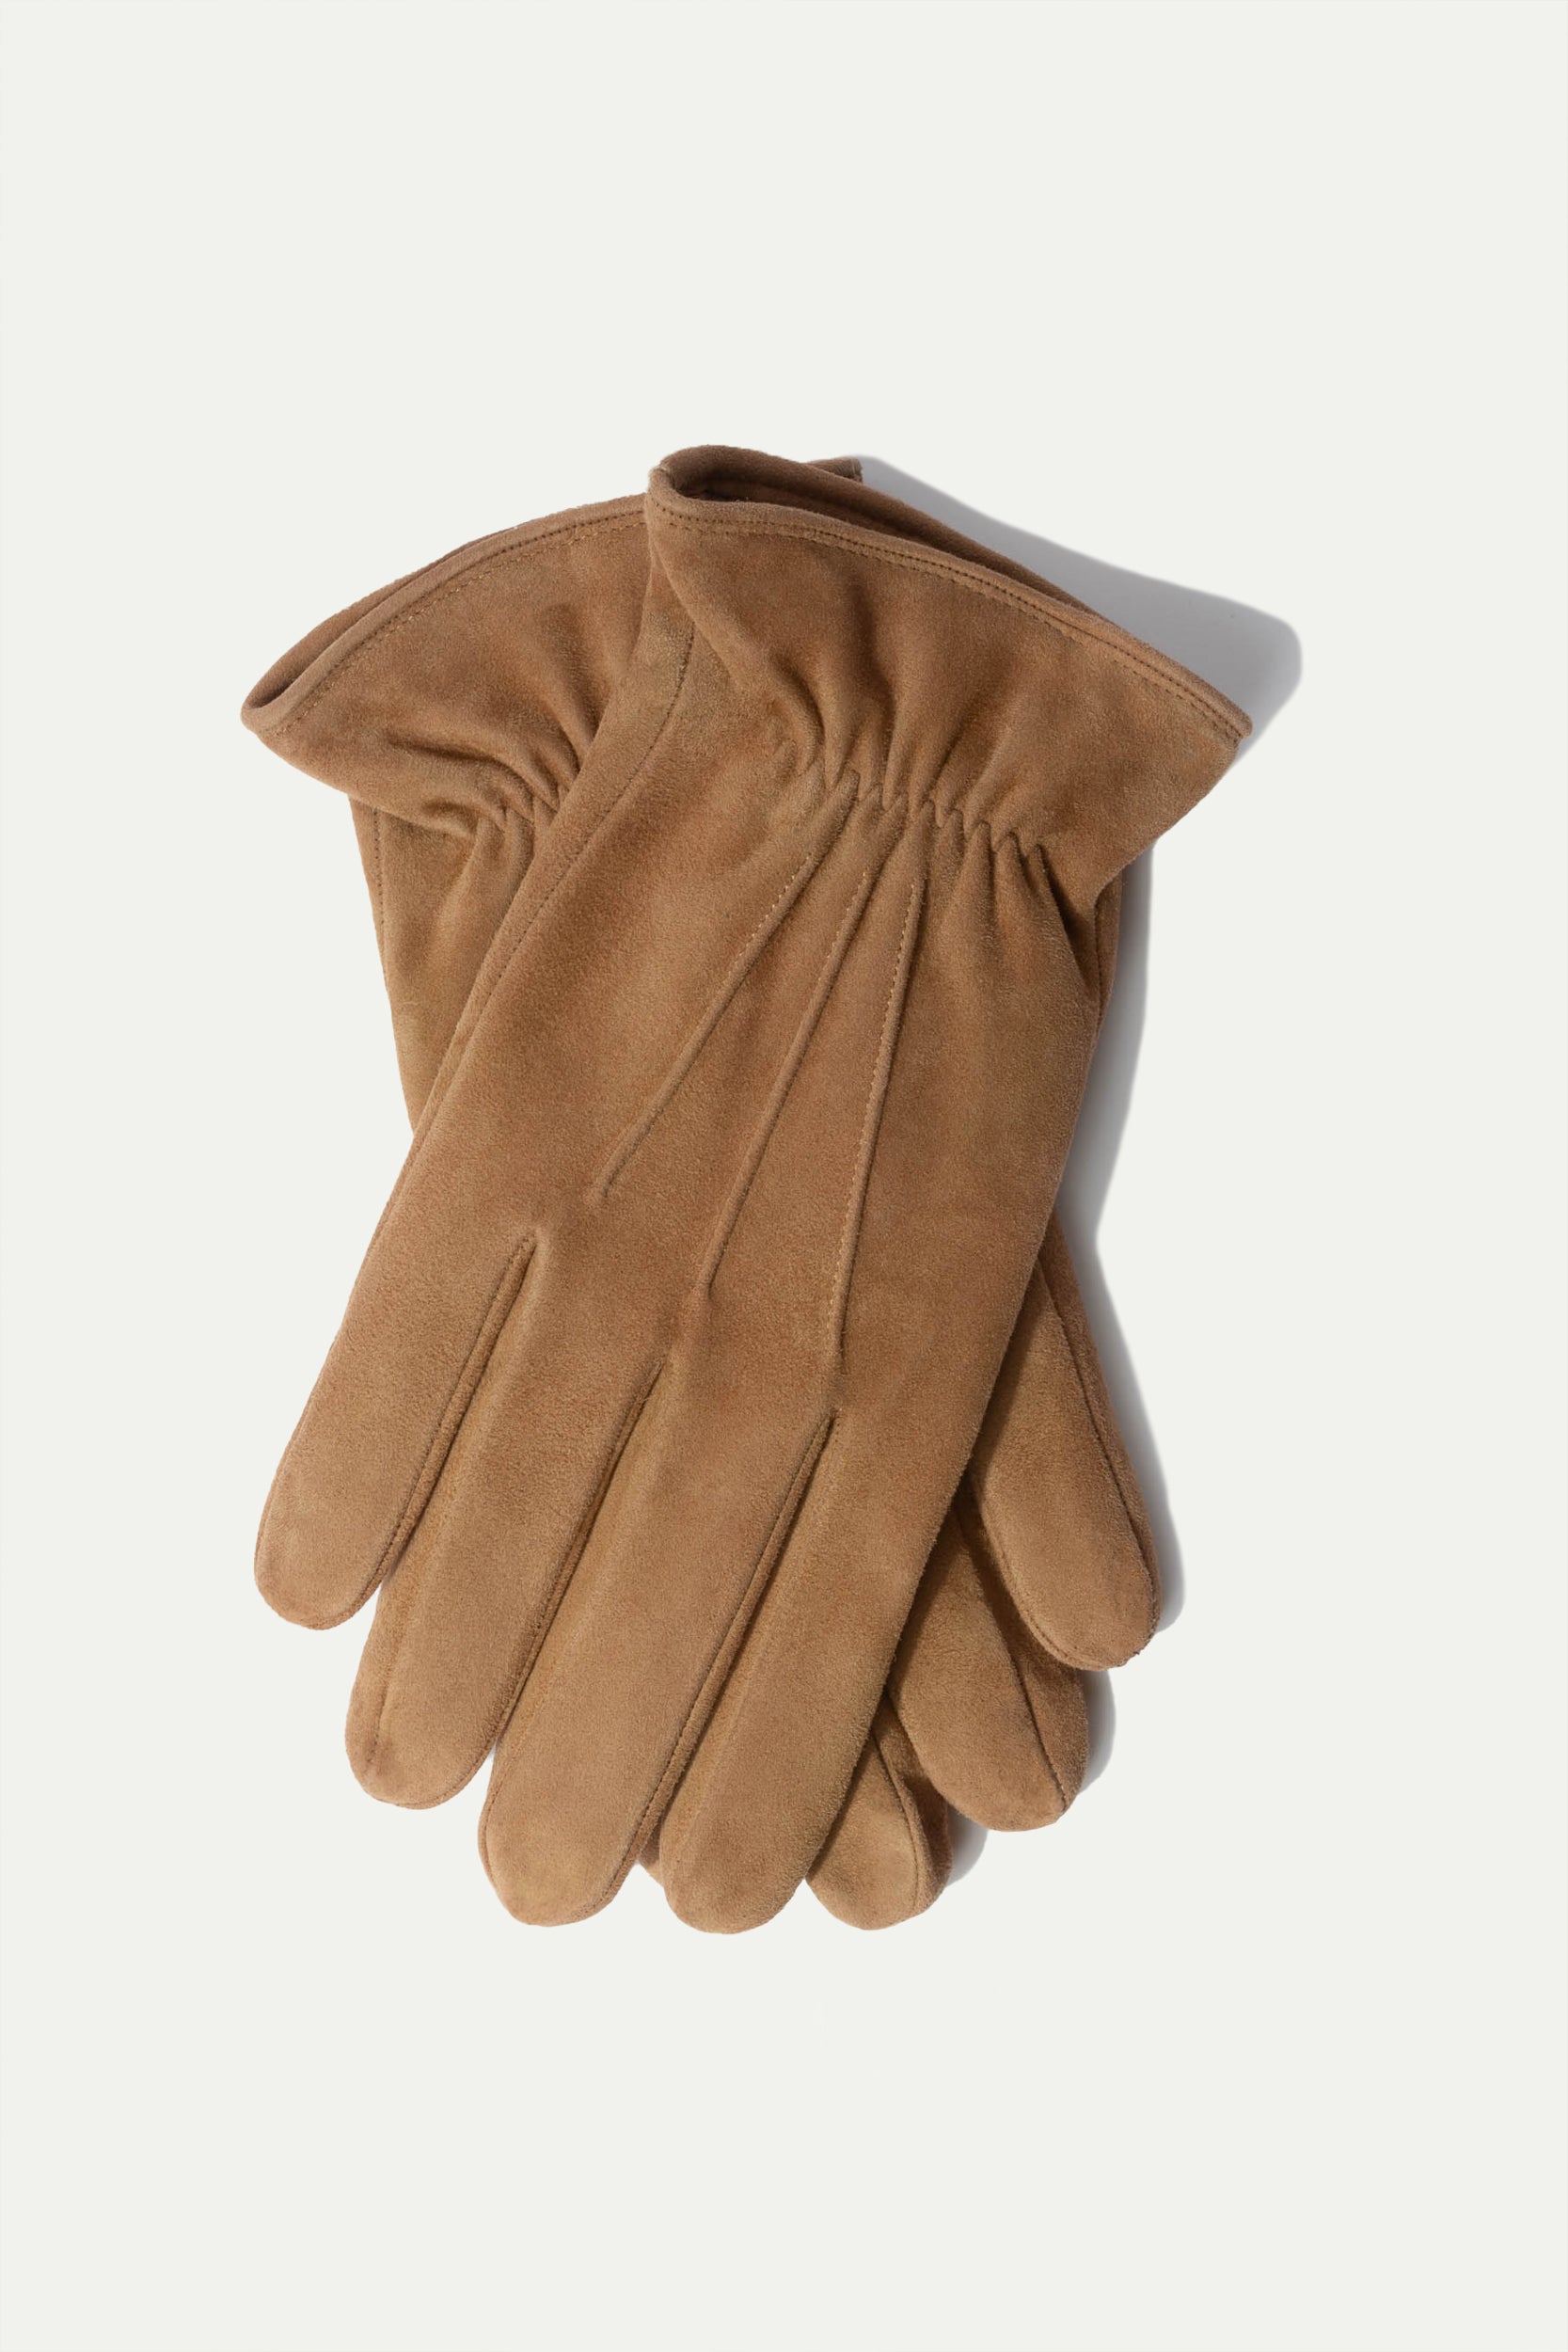 Black lambskin leather gloves - beige cashmere lining